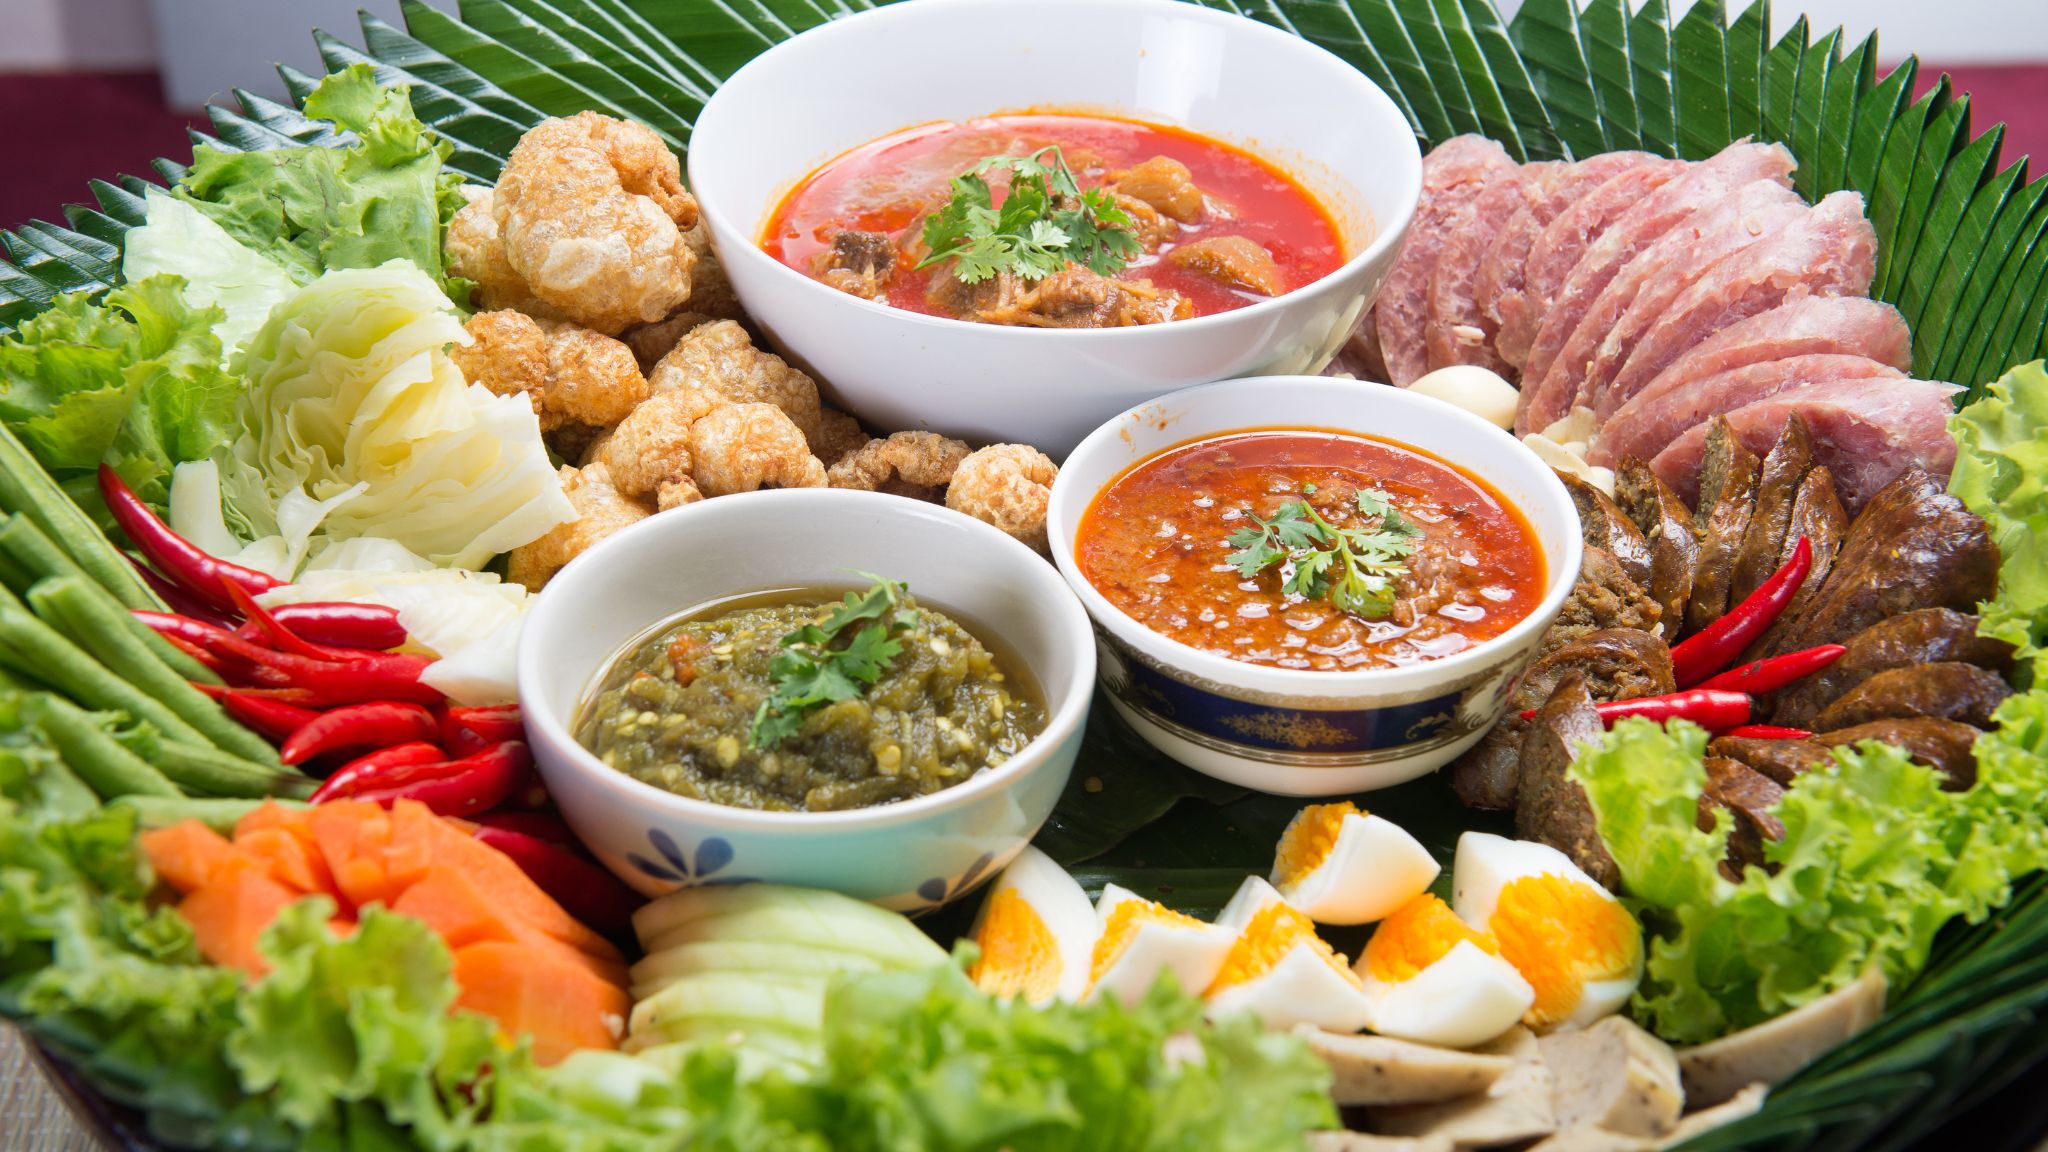 Day 5 Enjoy The Authentic Taste Of Thai Foods With Khantoke Dinner